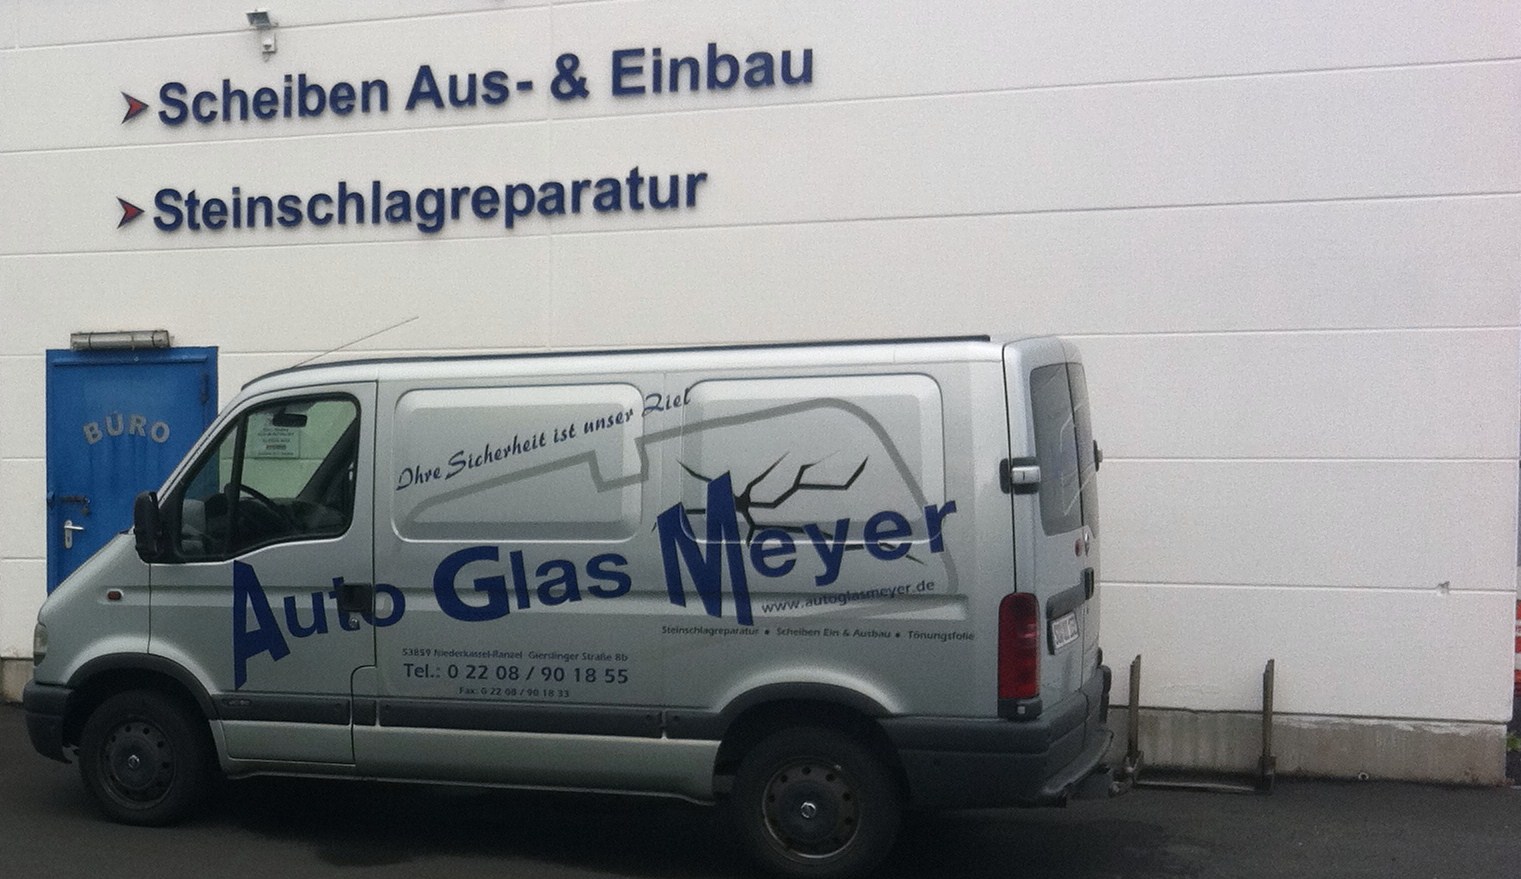 A-G-M  Auto-Glas-Meyer logo